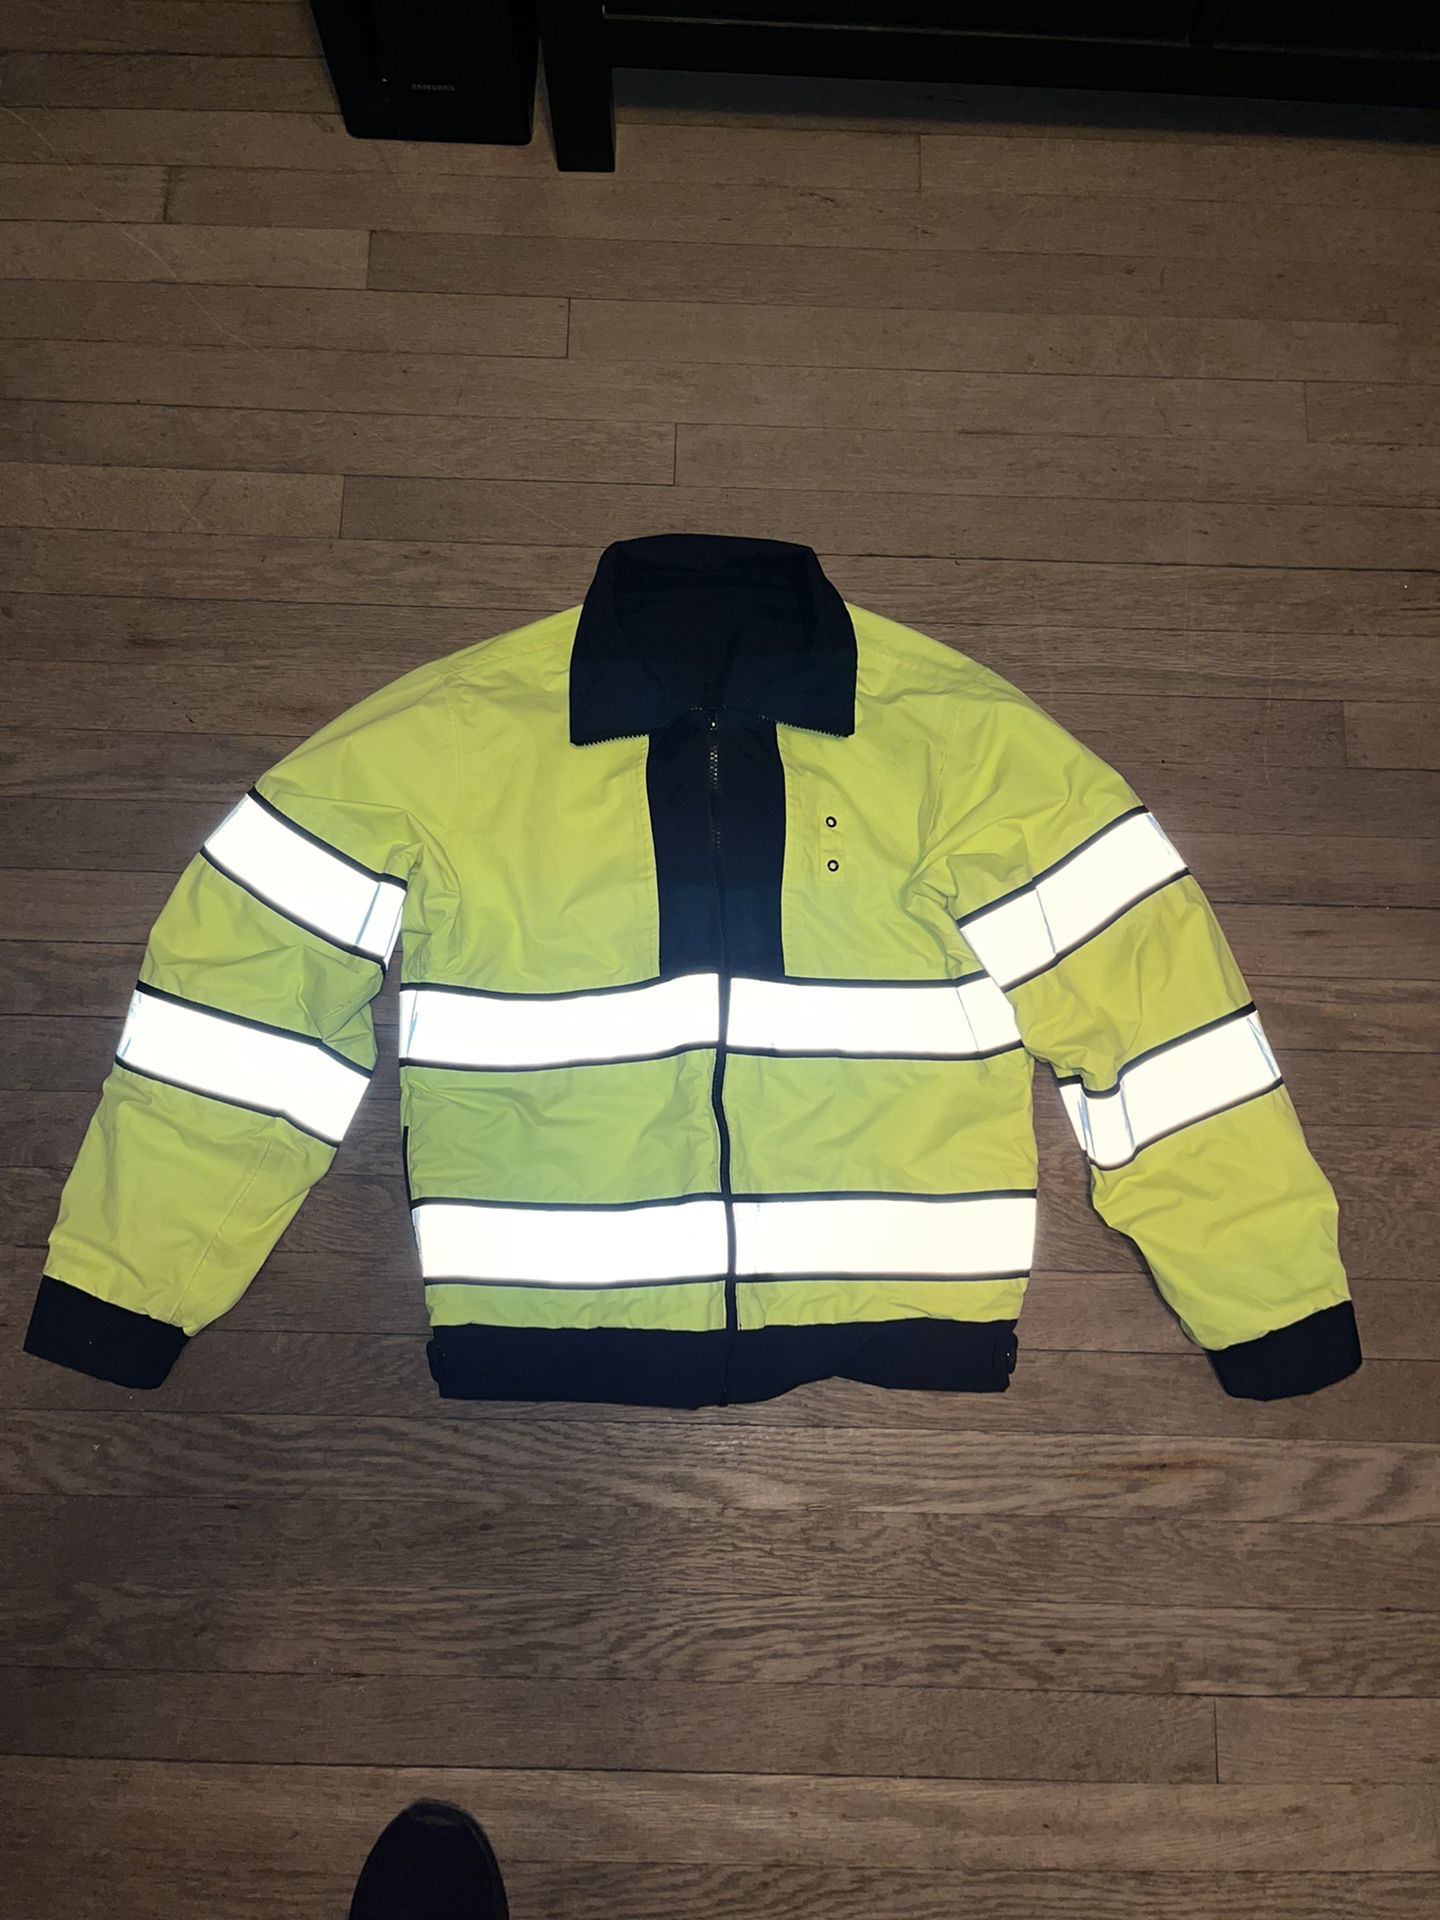 Black Hi-Visibility Waterproof REVERSIBLE Uniform Coat Duty Jacket Neon Hi Vis